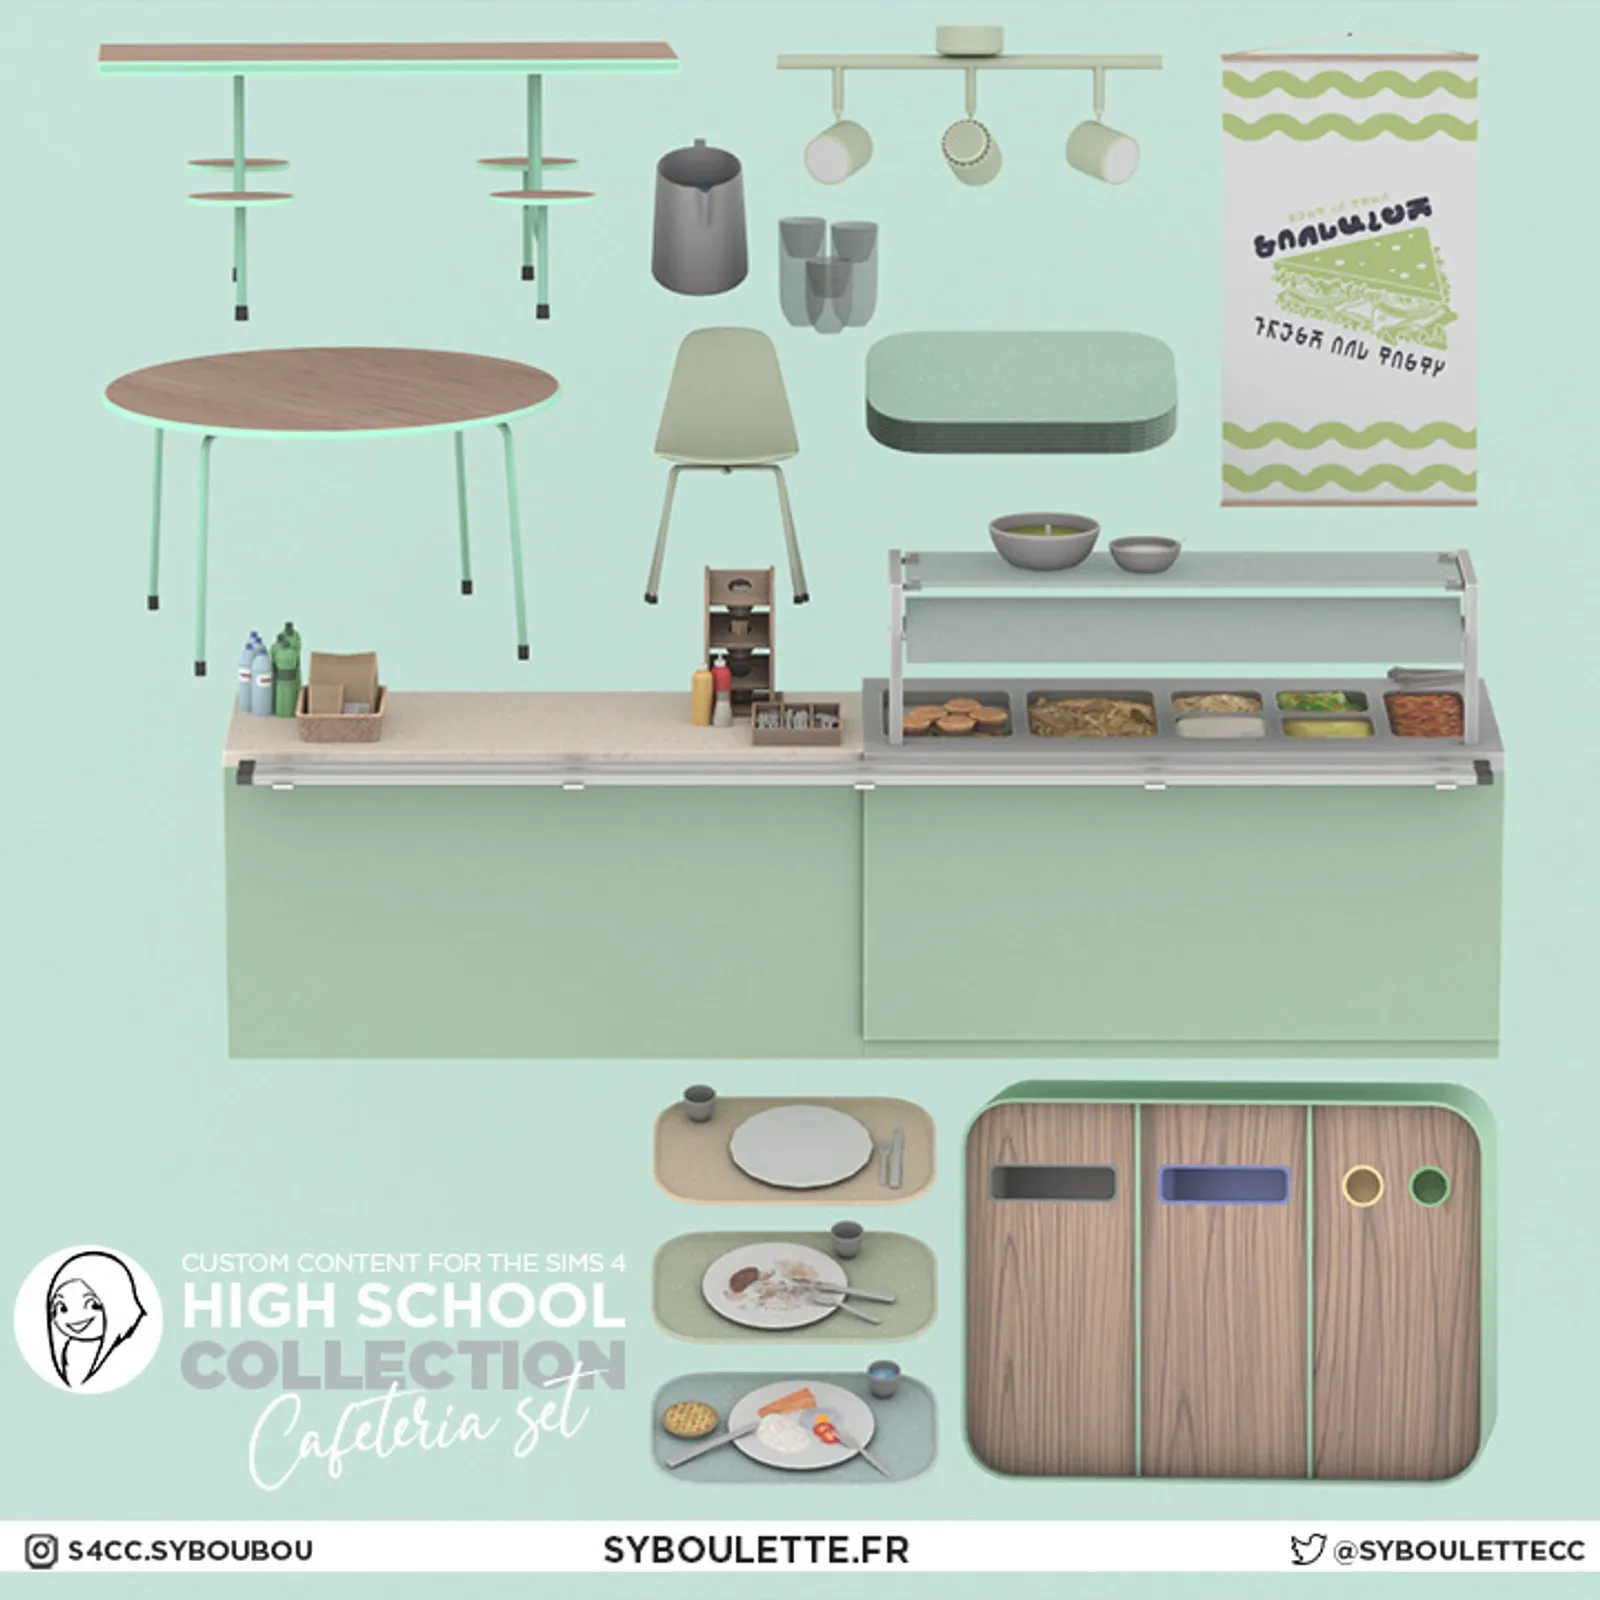 [DOWNLOAD] High School part 3 (Cafeteria set)